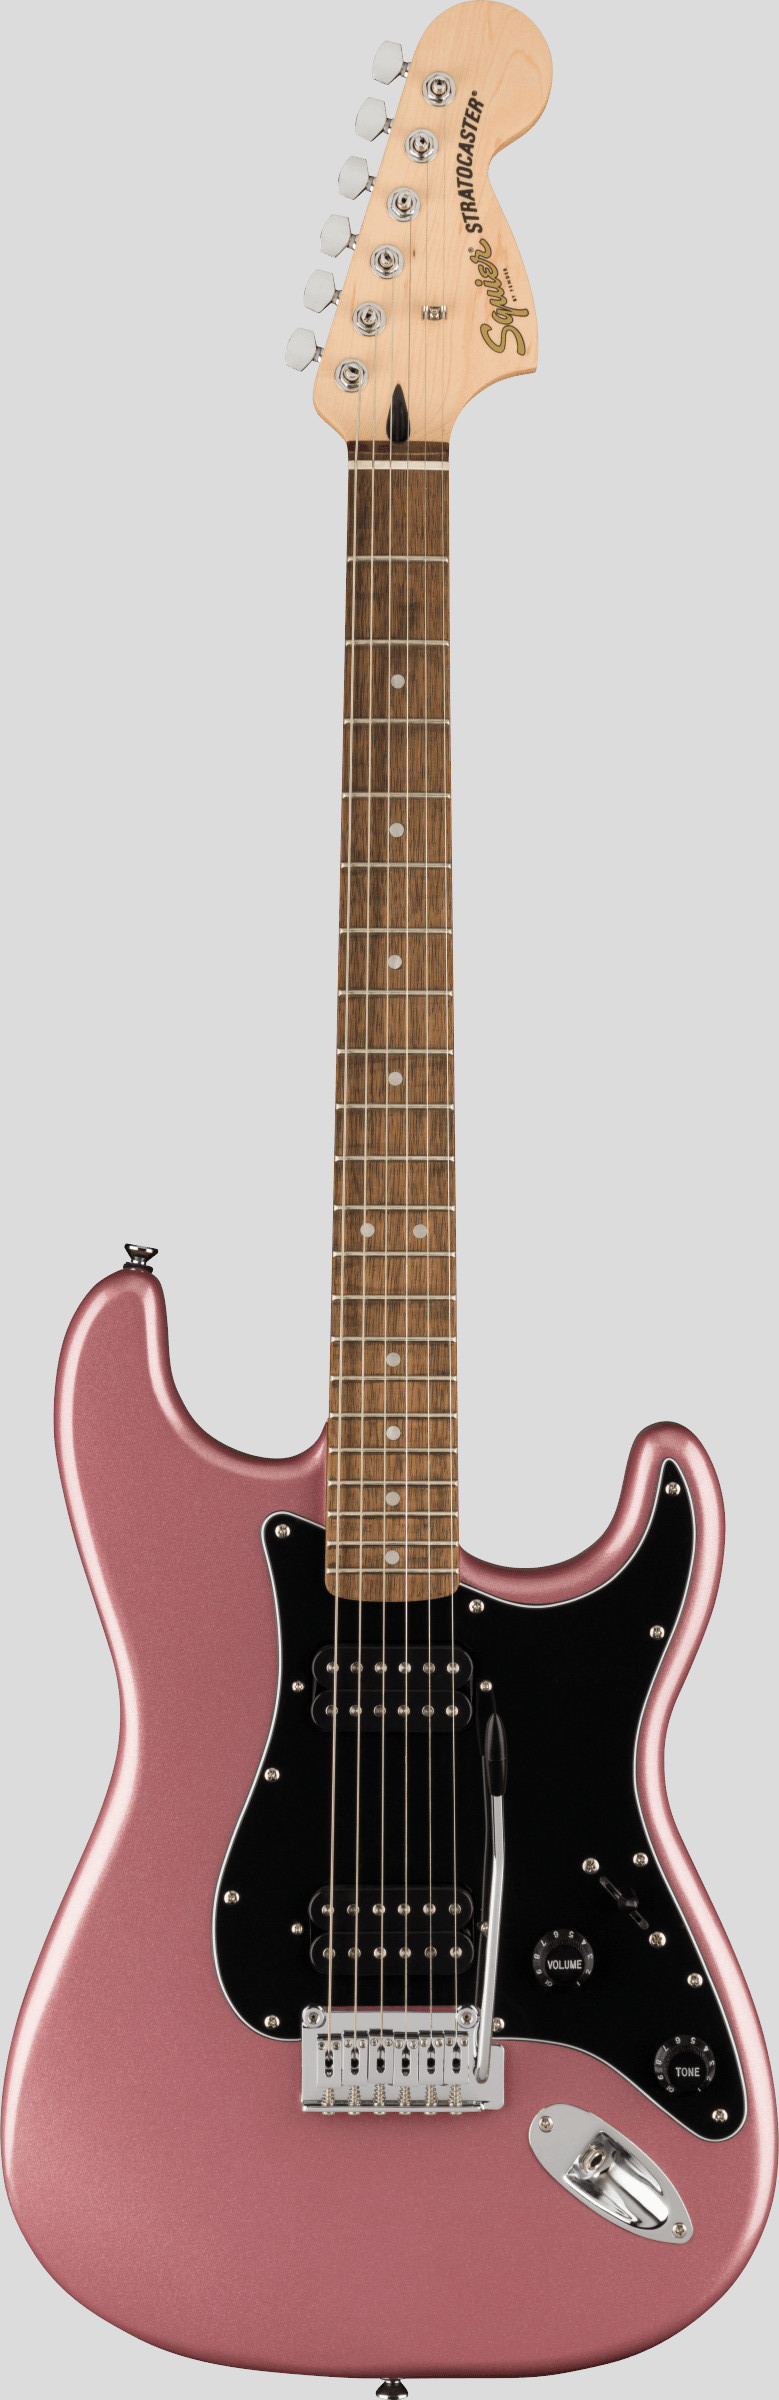 Squier by Fender Affinity Stratocaster HH Burgundy Mist 1